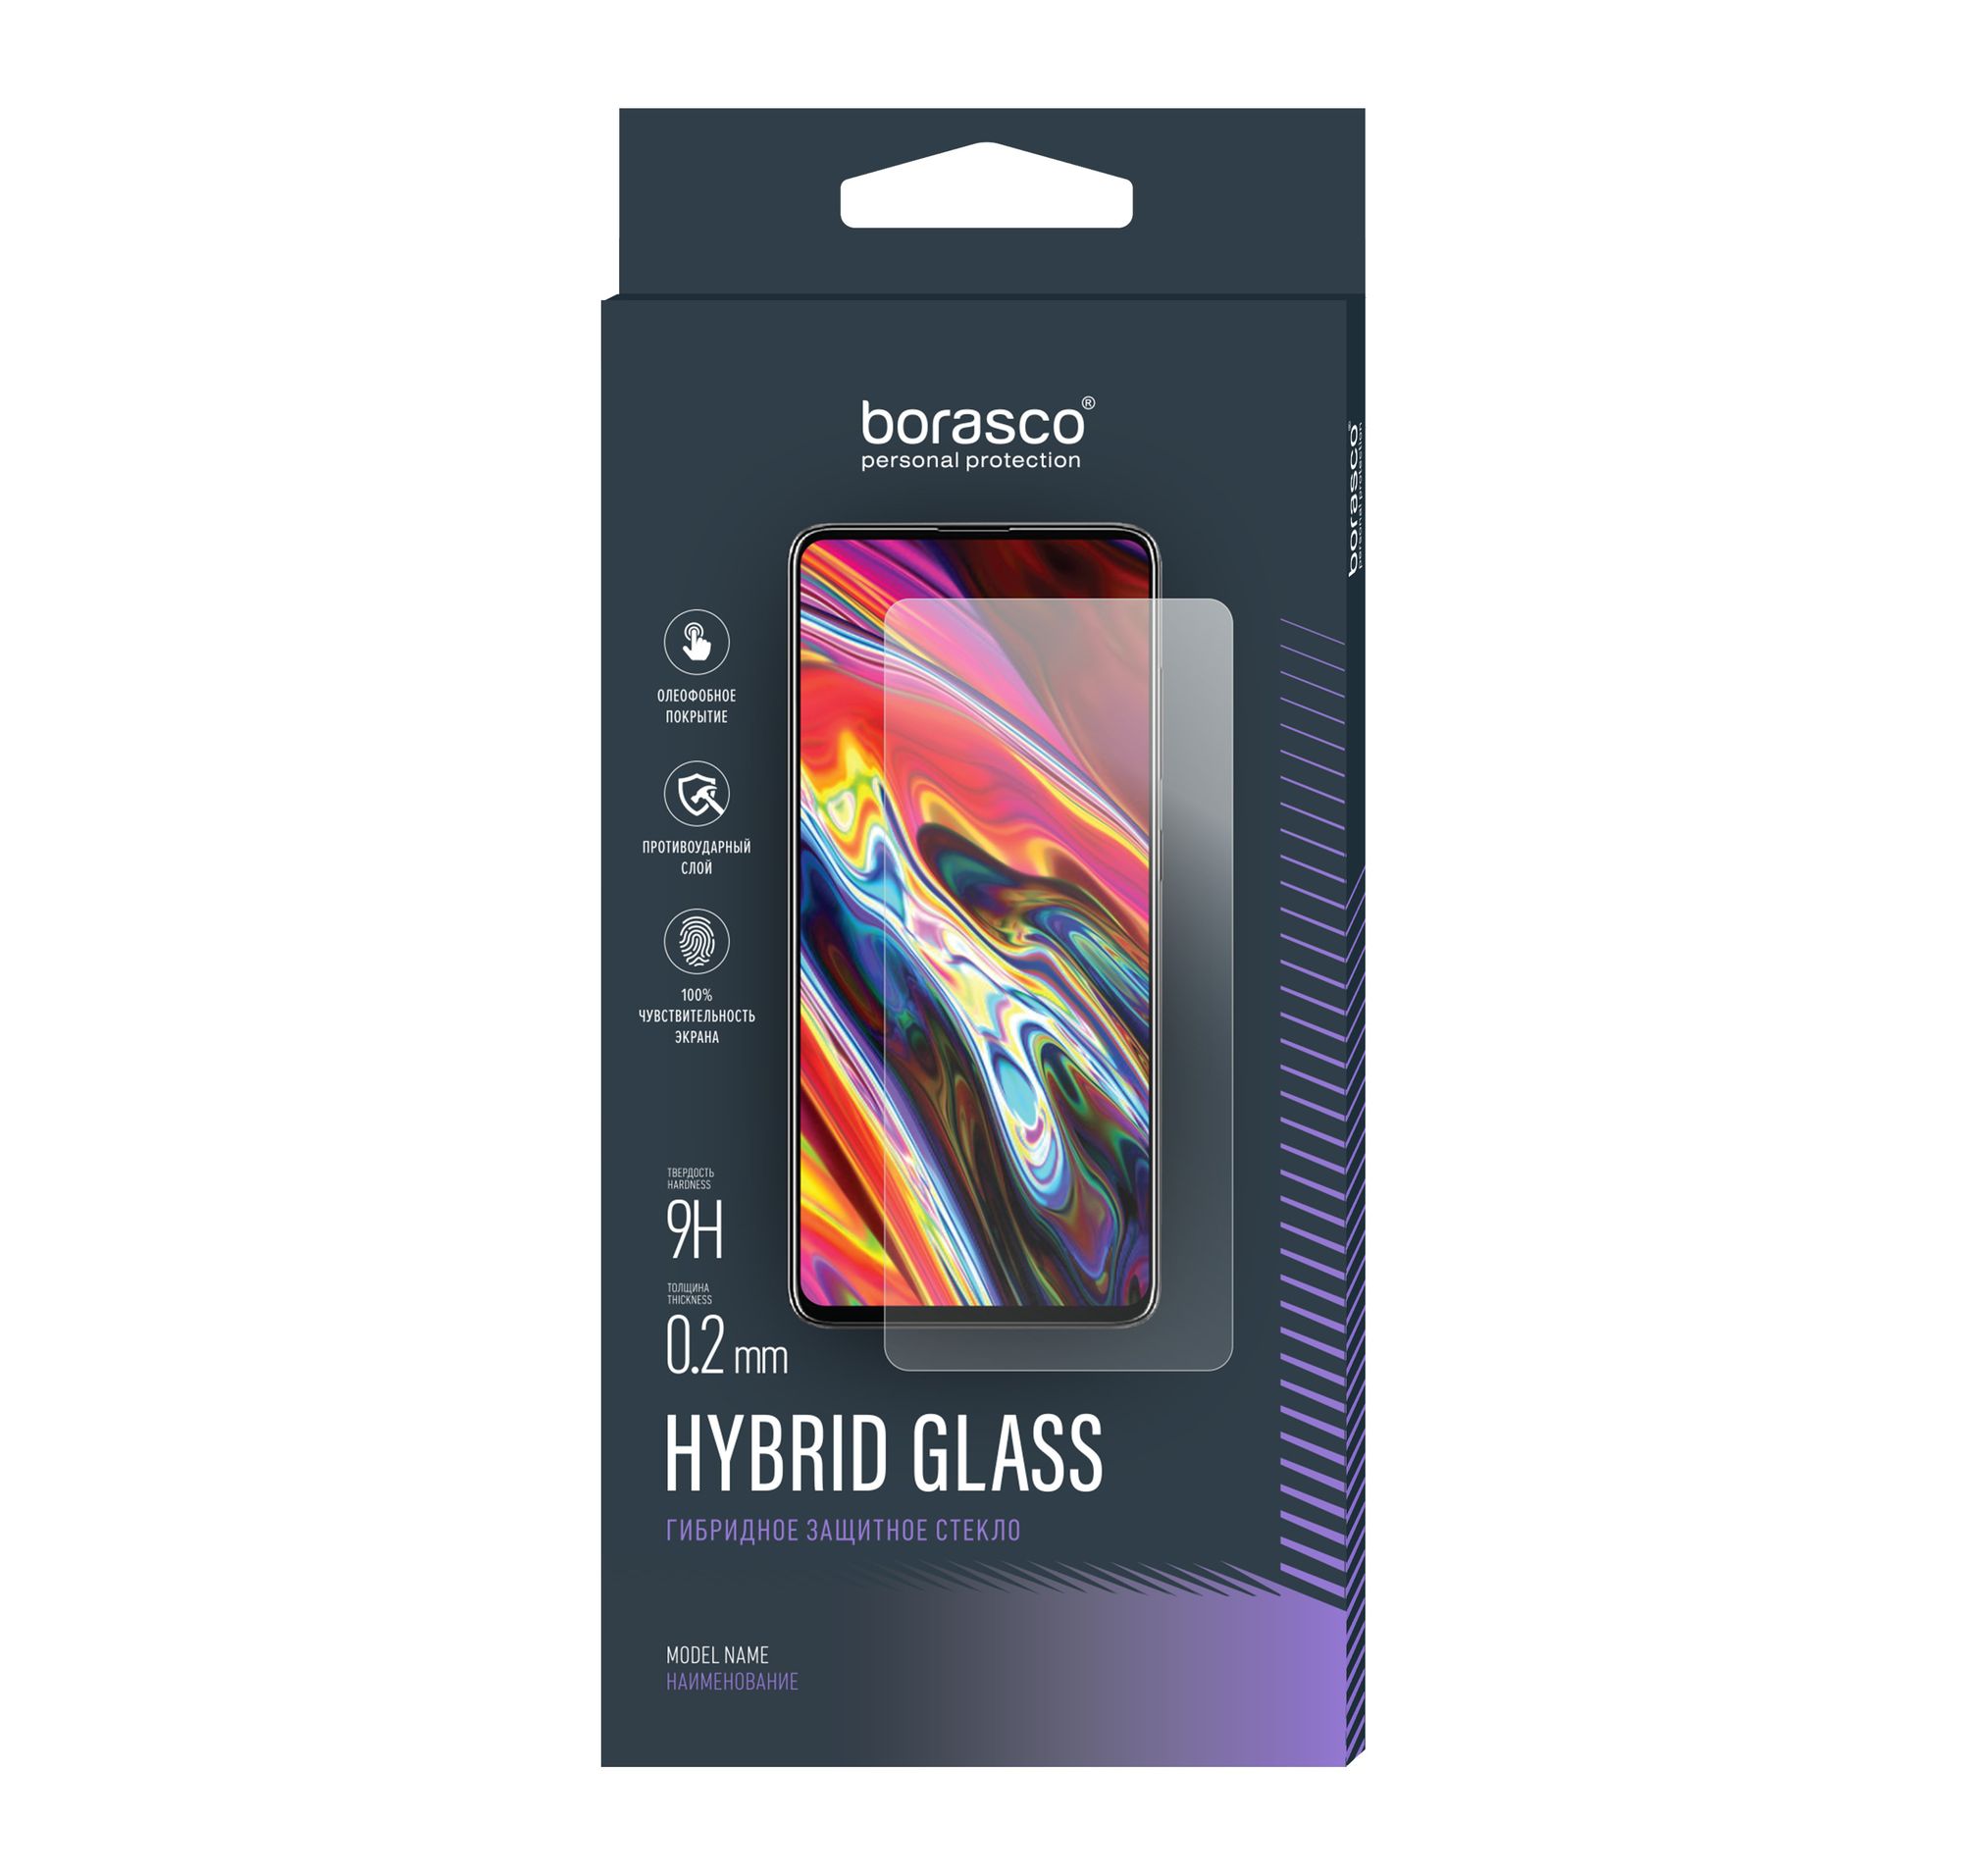 Стекло защитное Hybrid Glass VSP 0,26 мм для iPhone 7 Plus/8 Plus